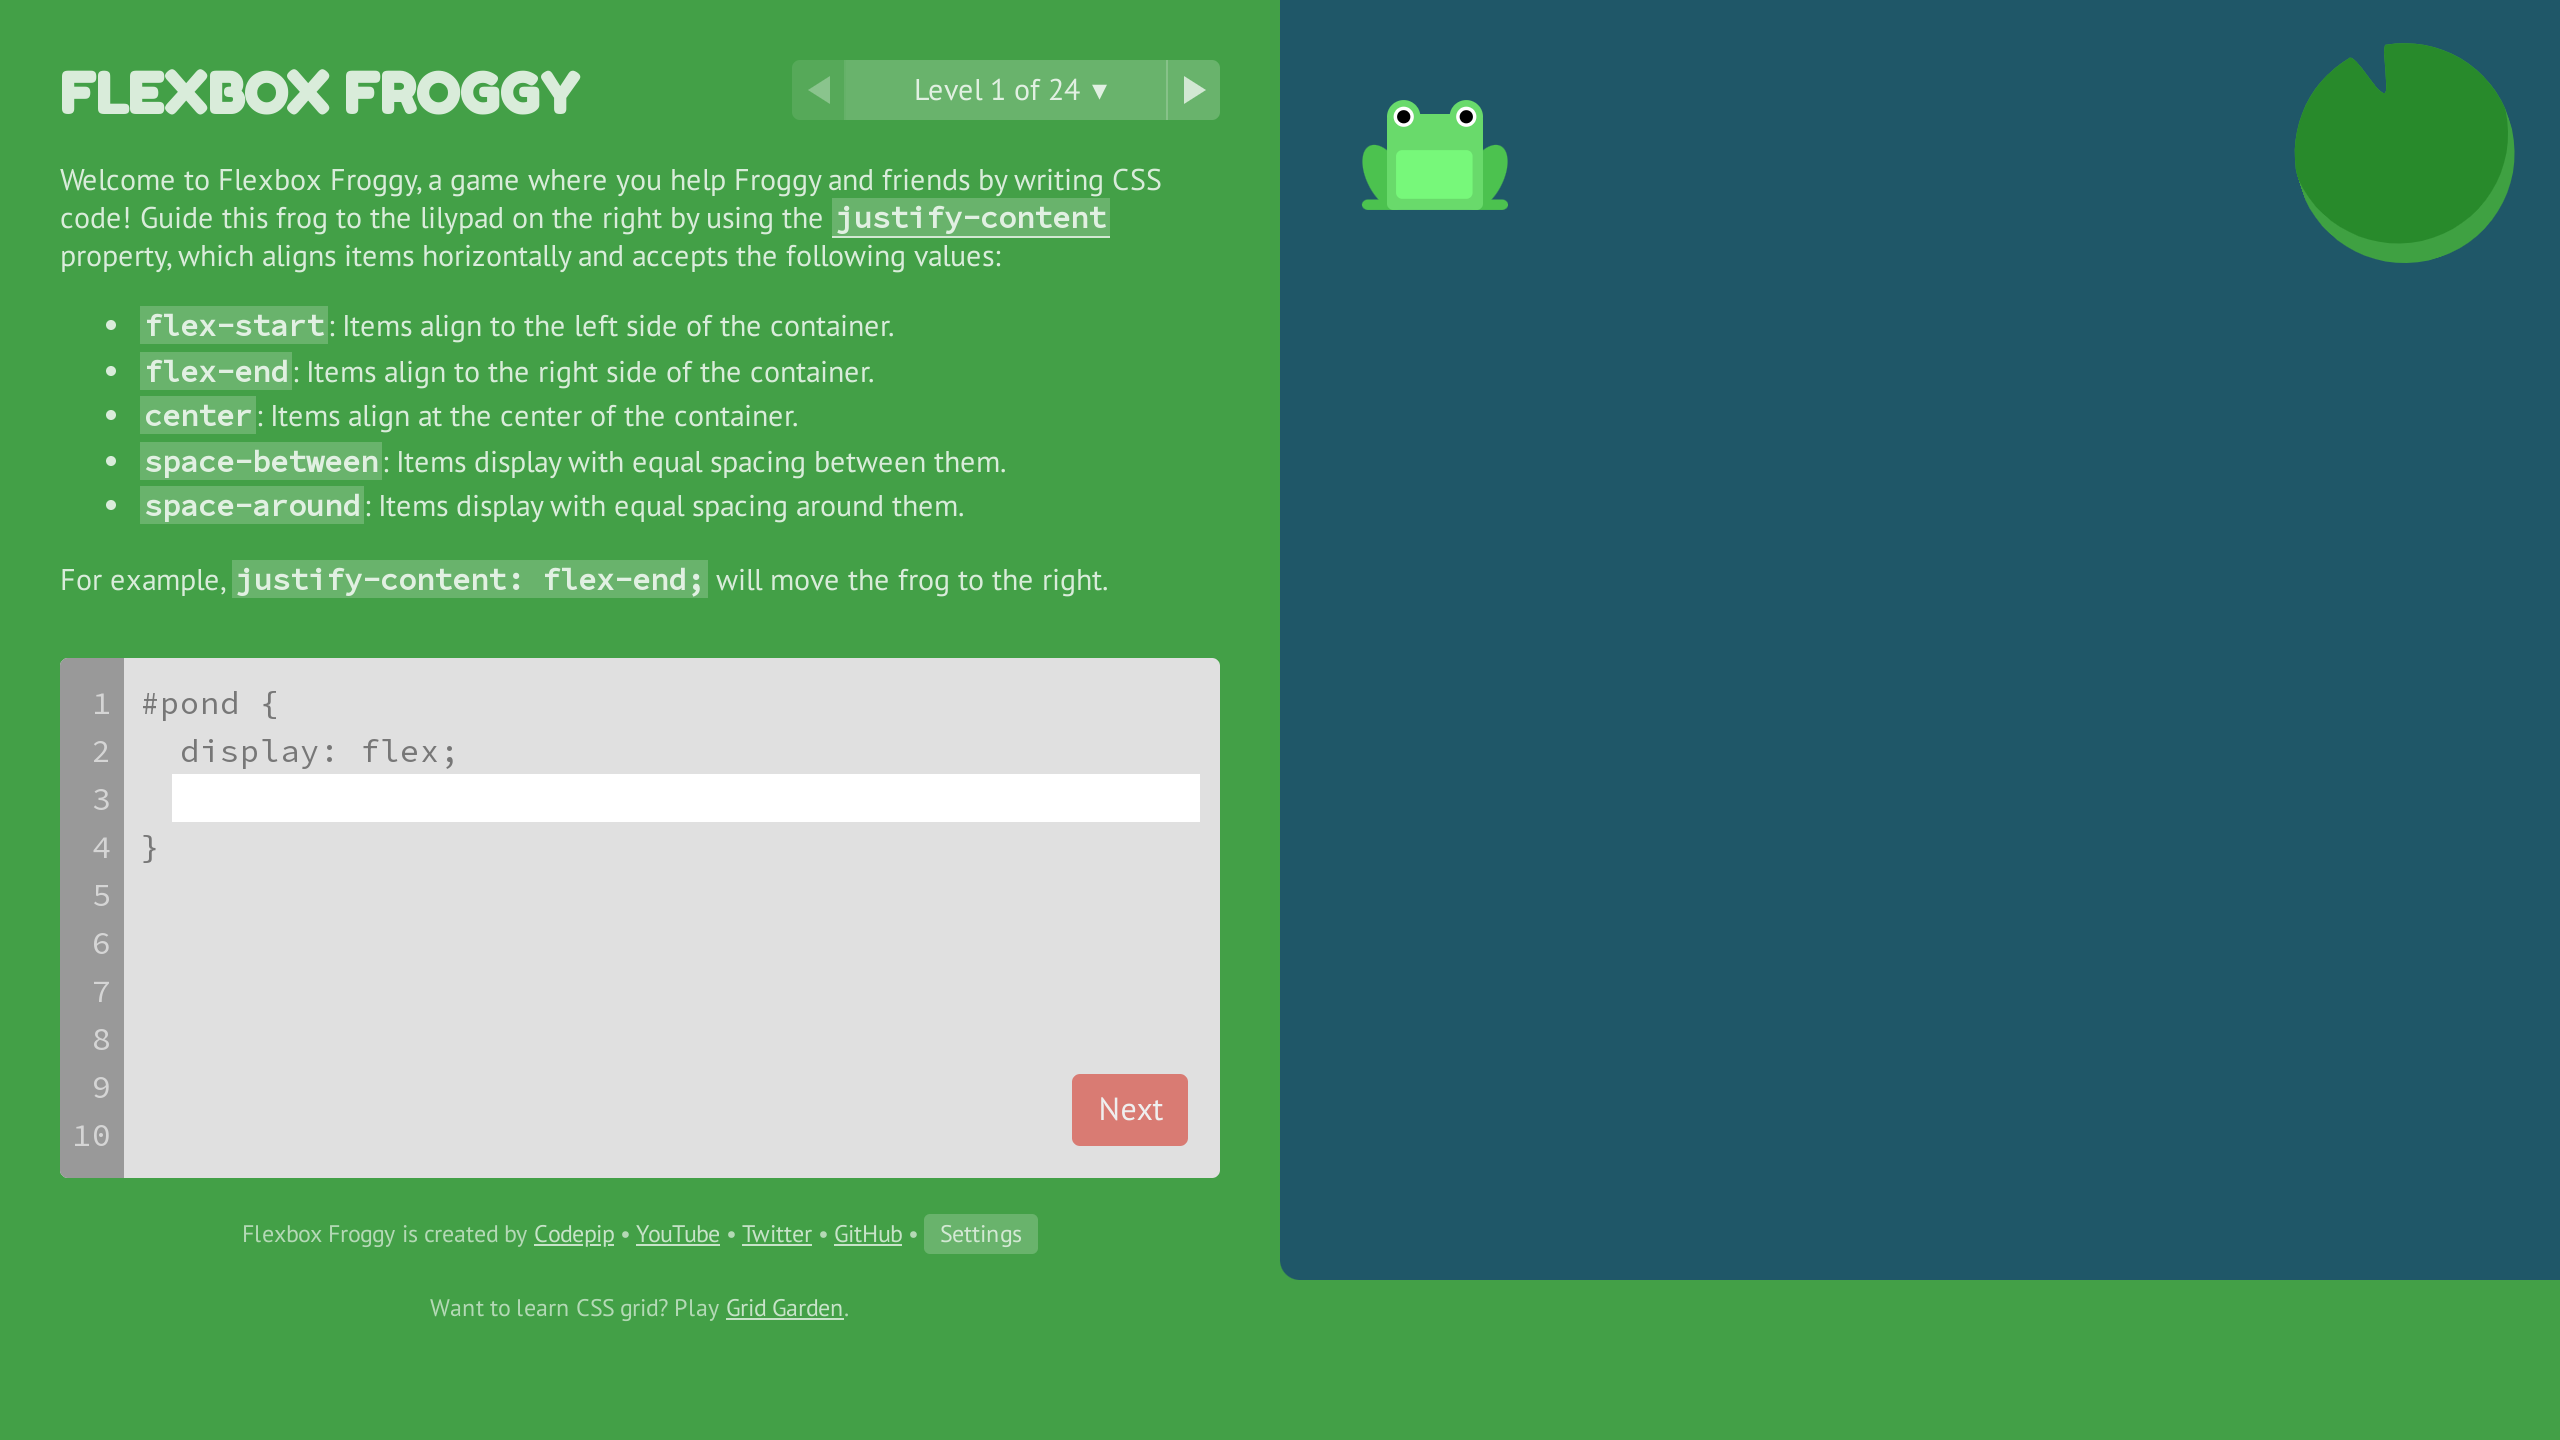 Flexbox Froggy's website screenshot